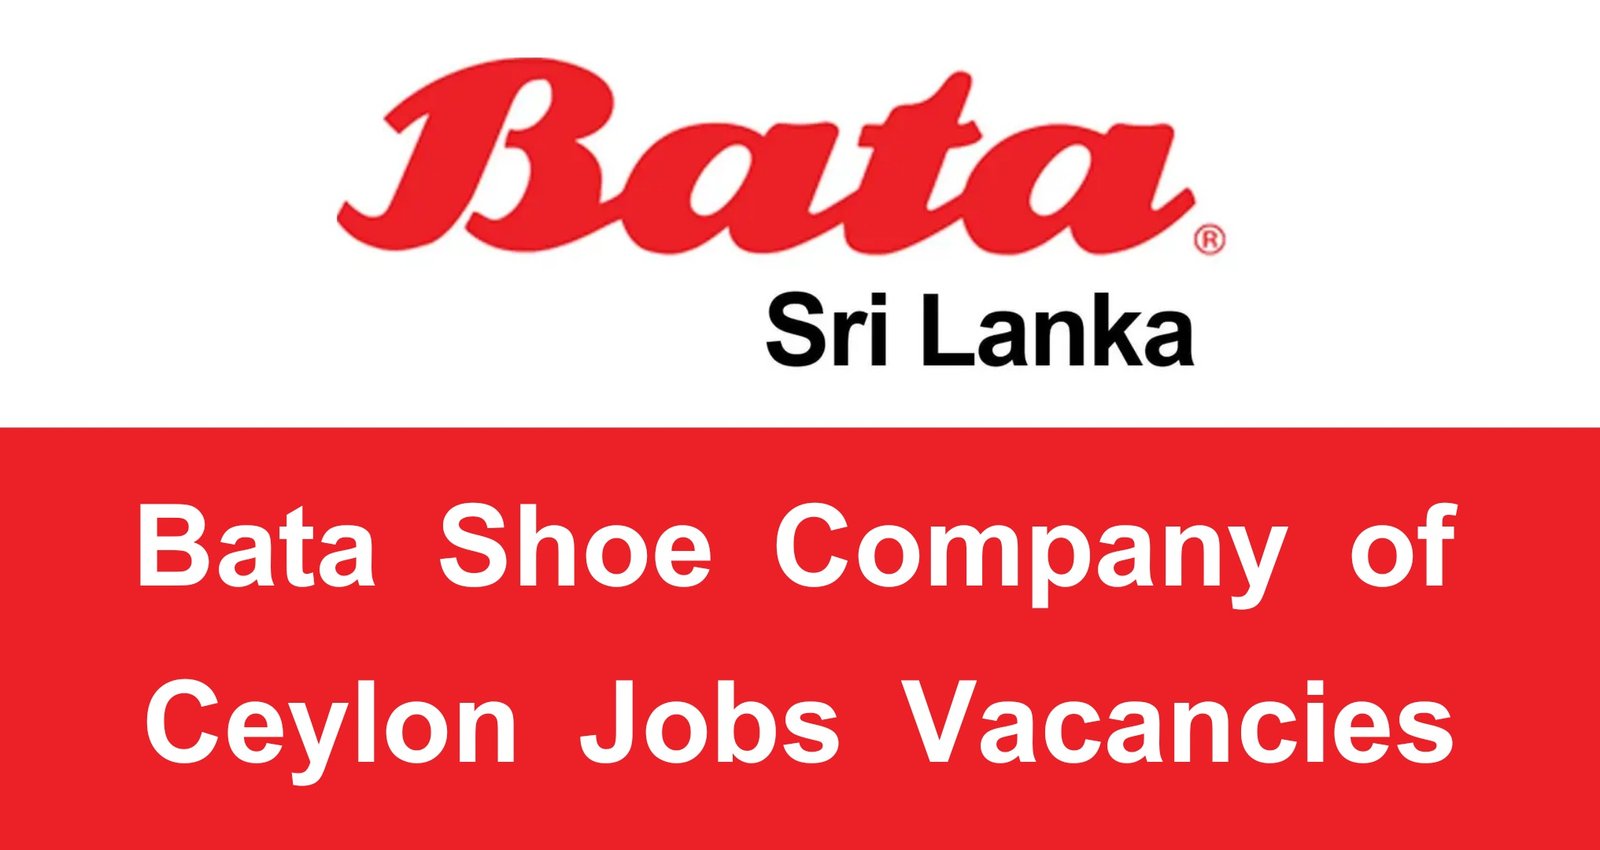 Bata Shoe Company of Ceylon Jobs Vacancies